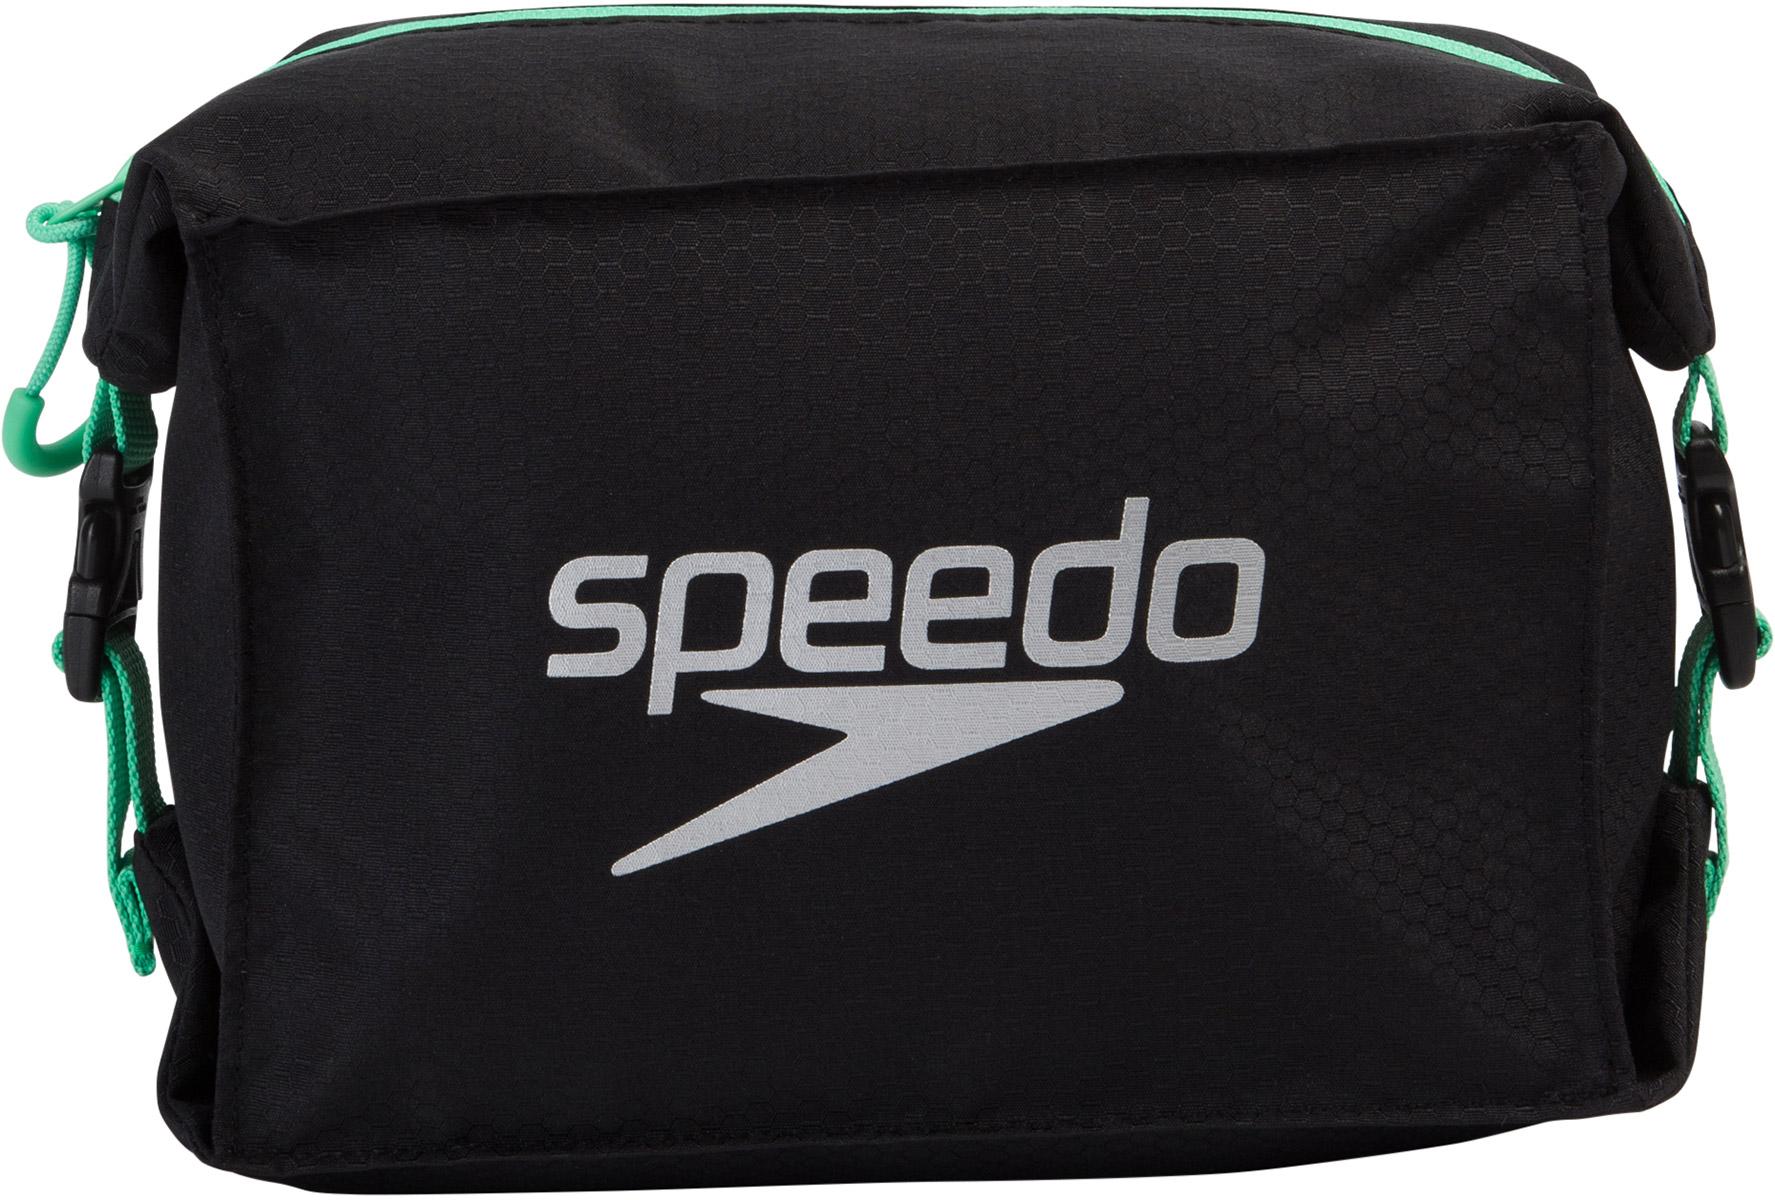 Speedo Poolside Bag - Black/green Glow